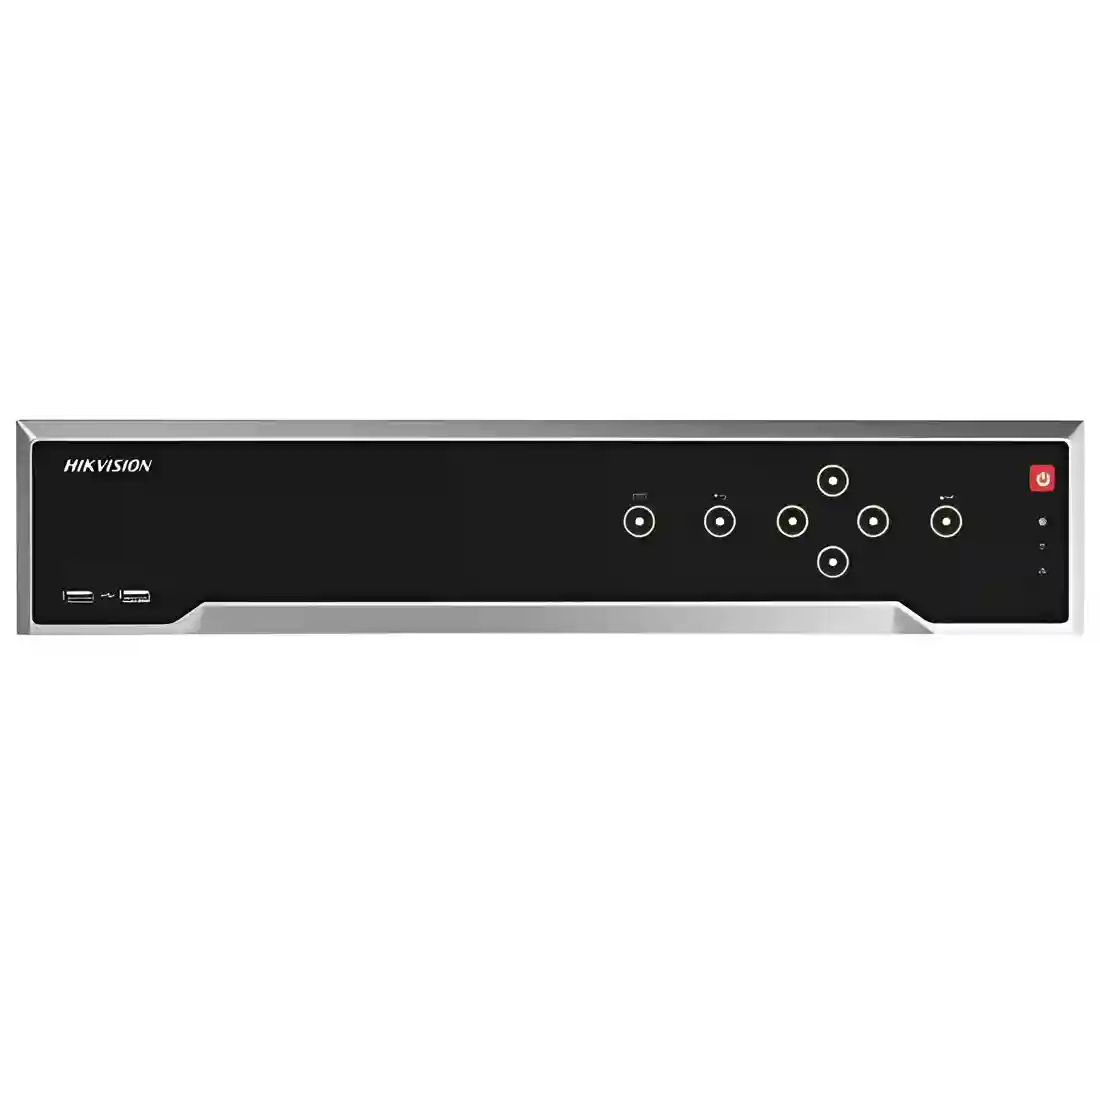 Hikvision DS-7764NI-I4 IP Видеорегистратор